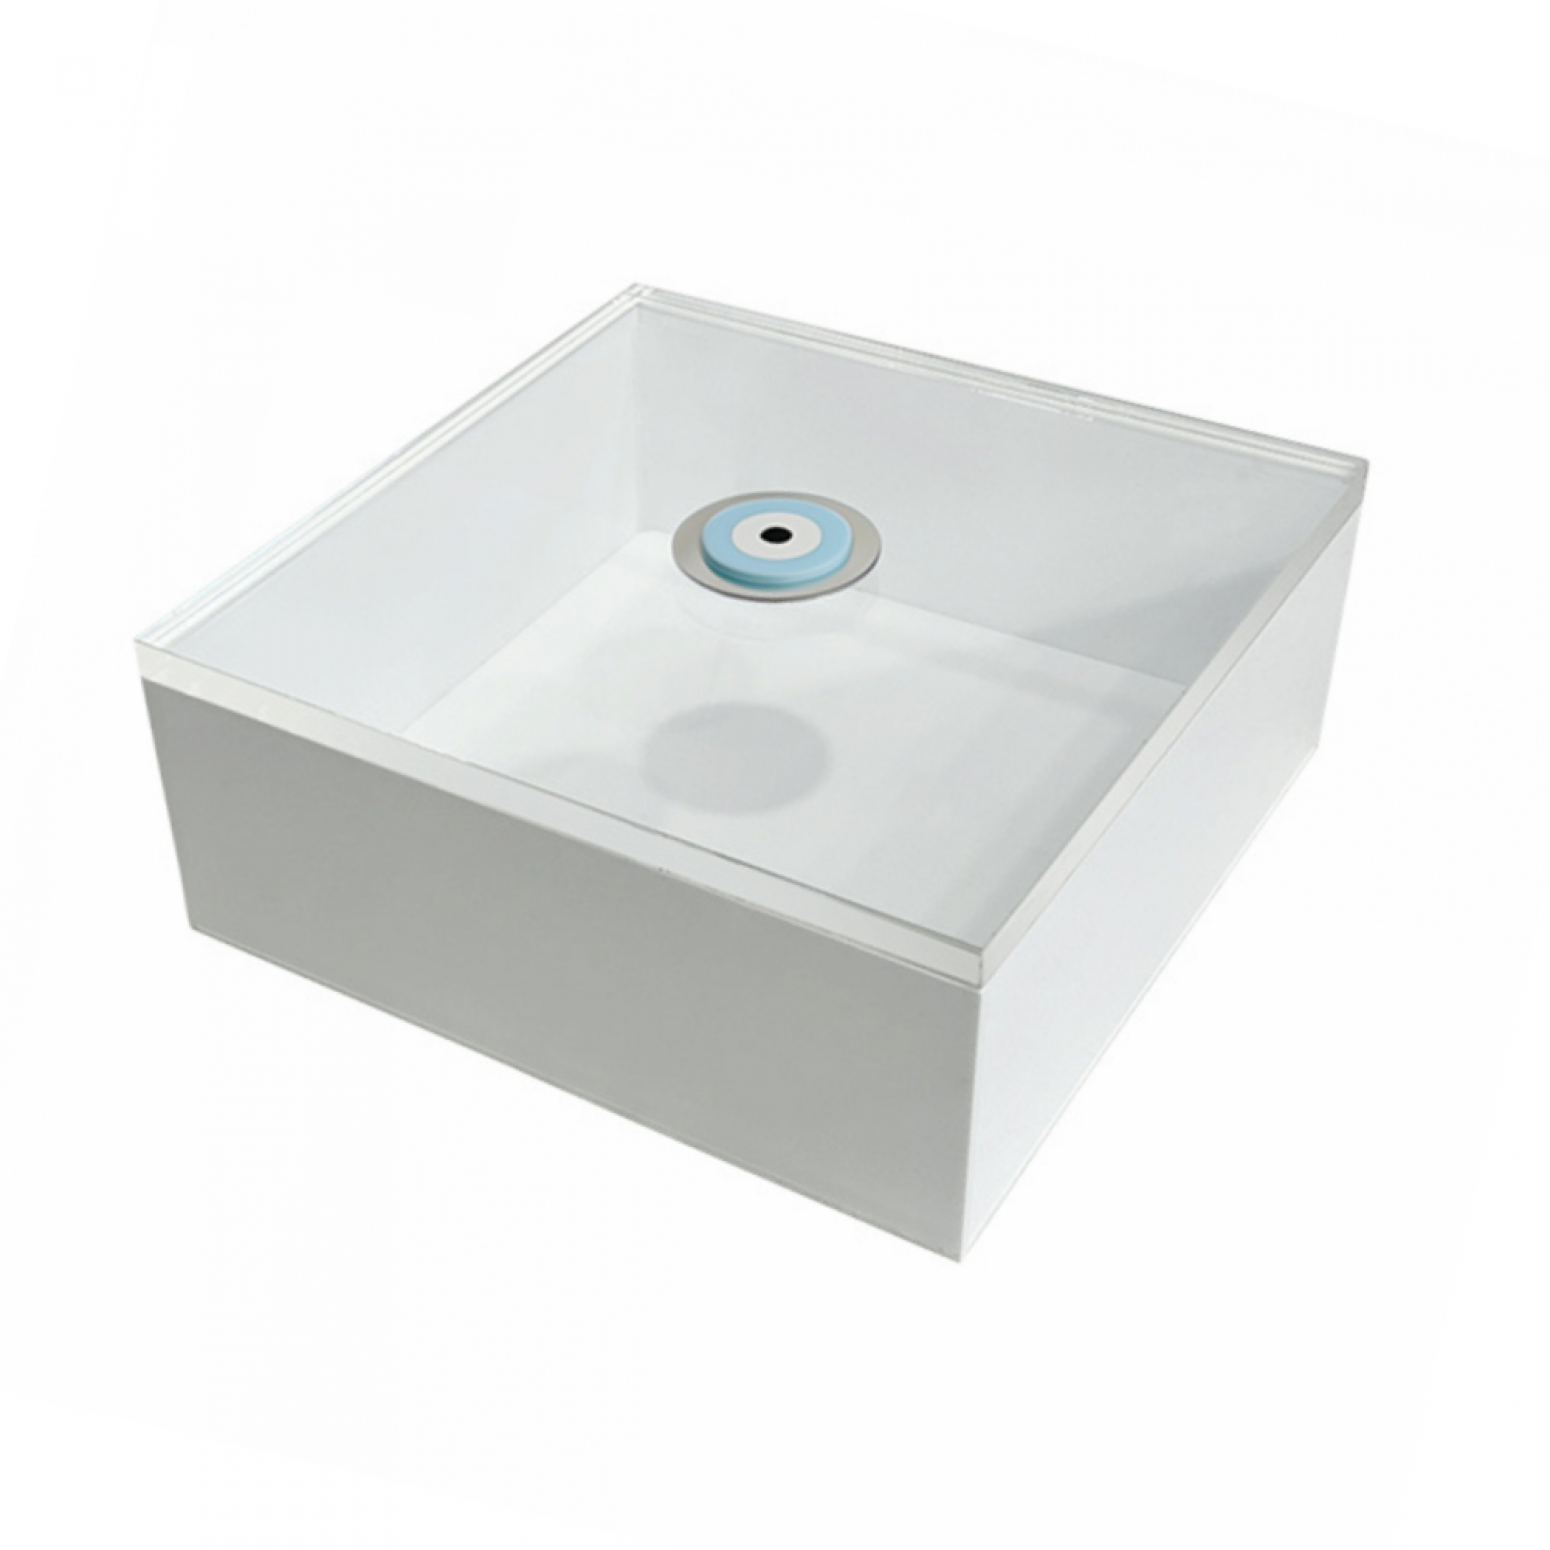 White plexiglass box with transparent lid and corian eye 20 x 20 x 8cm, ac1410 GIFTS Κοσμηματα - chrilia.gr